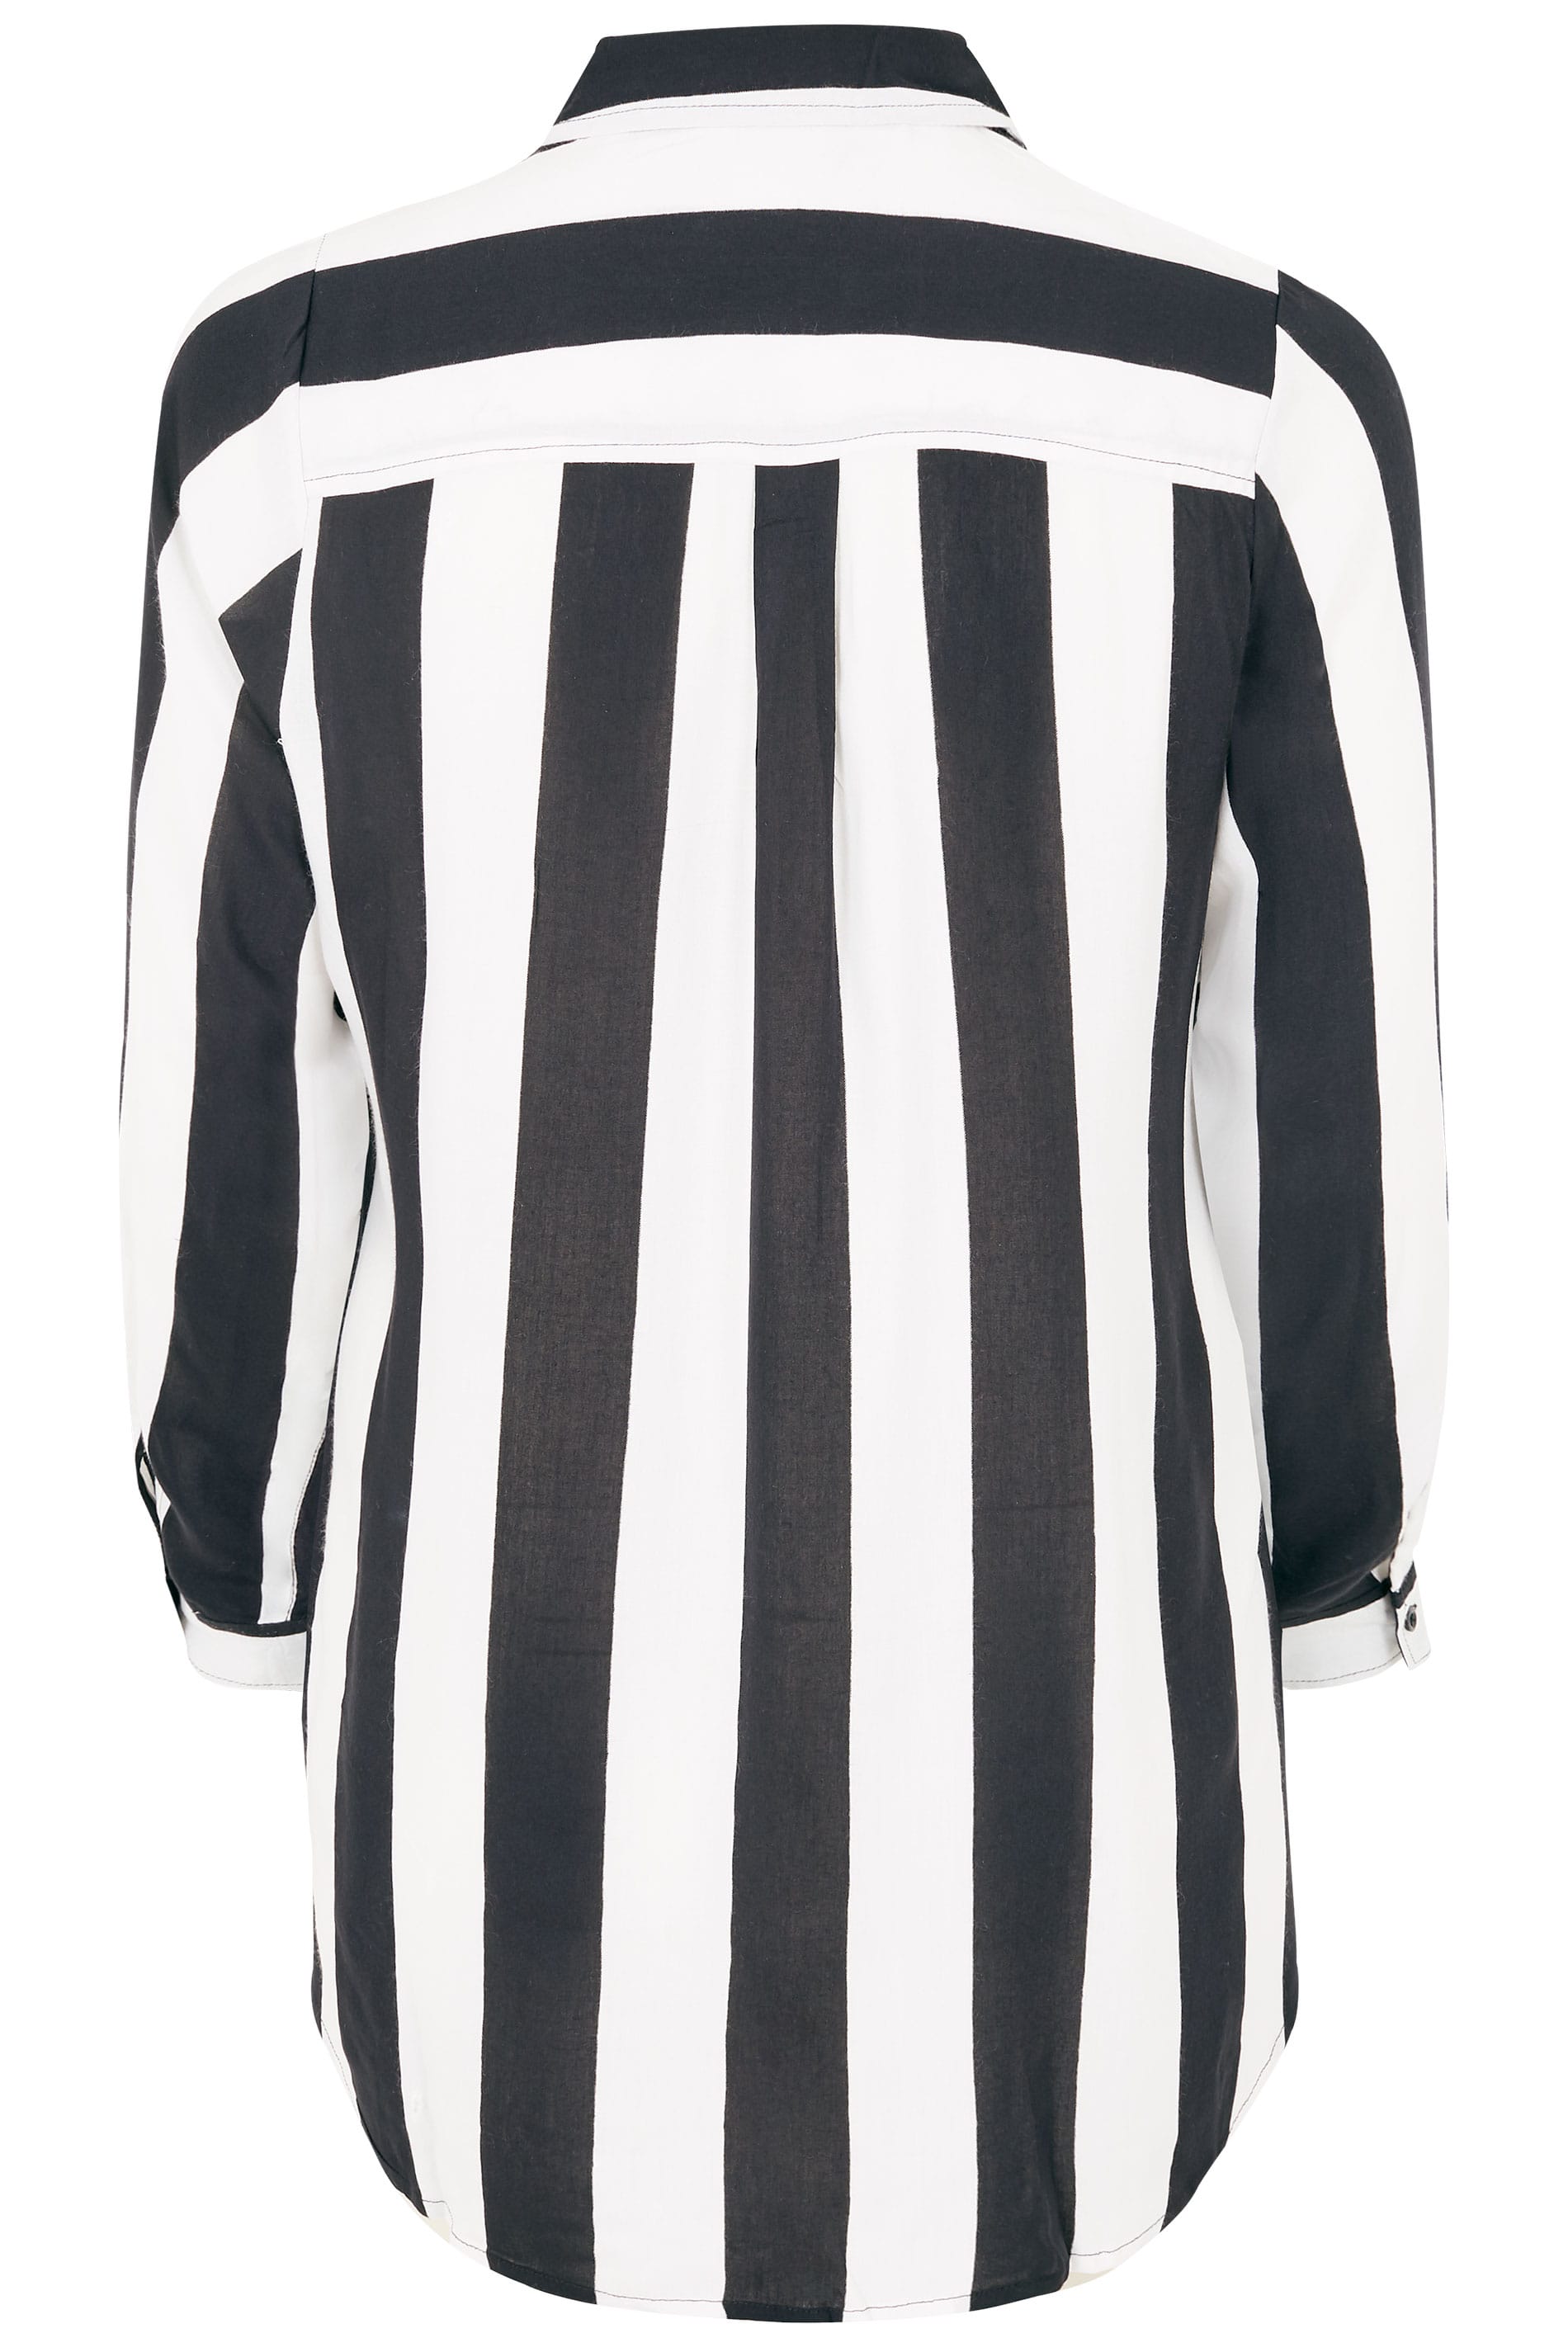 Black & White Striped Pocket Shirt, plus size 16 to 36